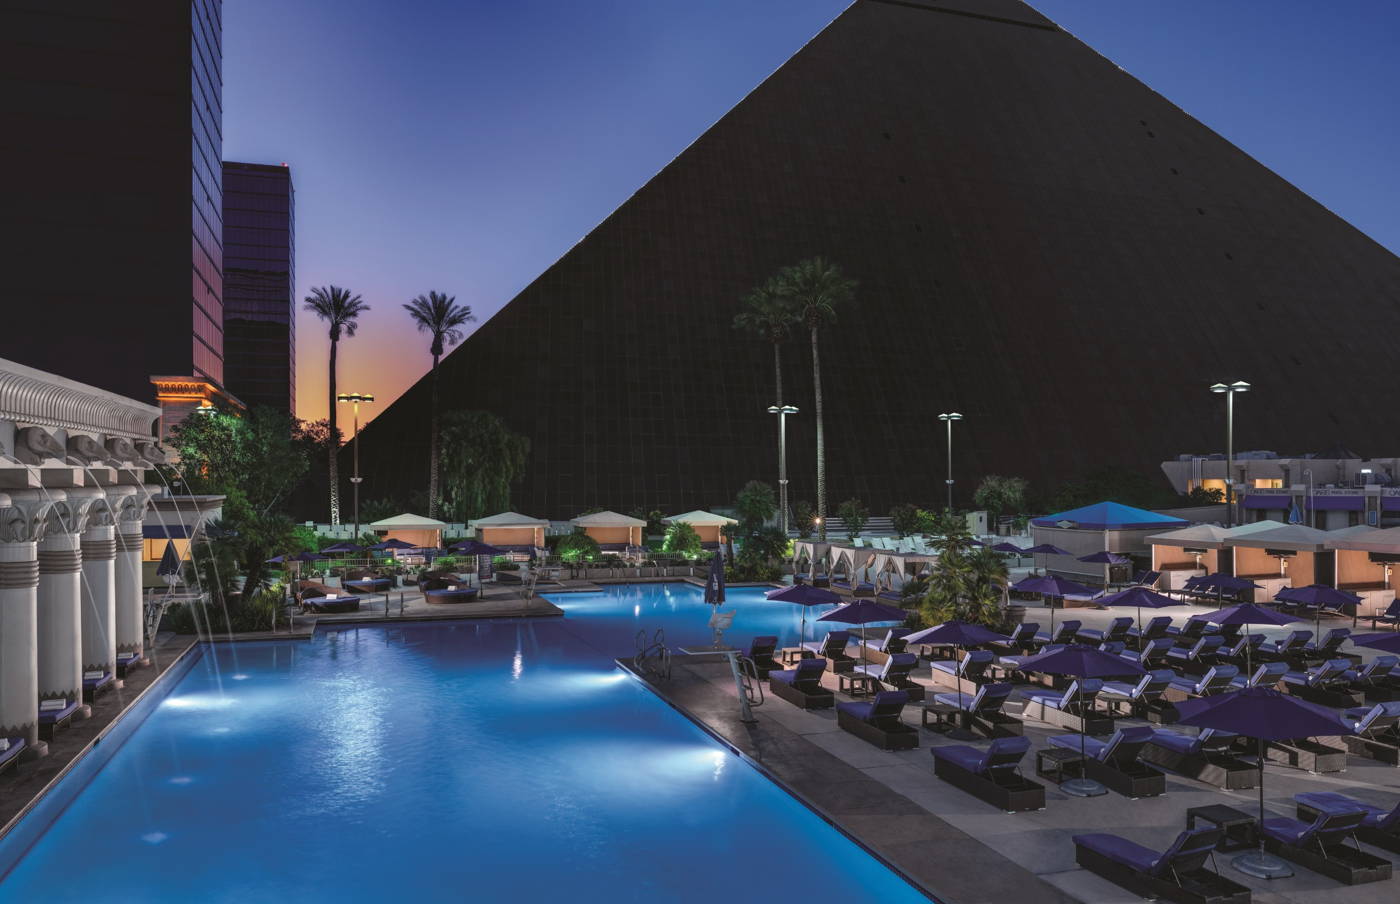 Luxor Pools Las Vegas